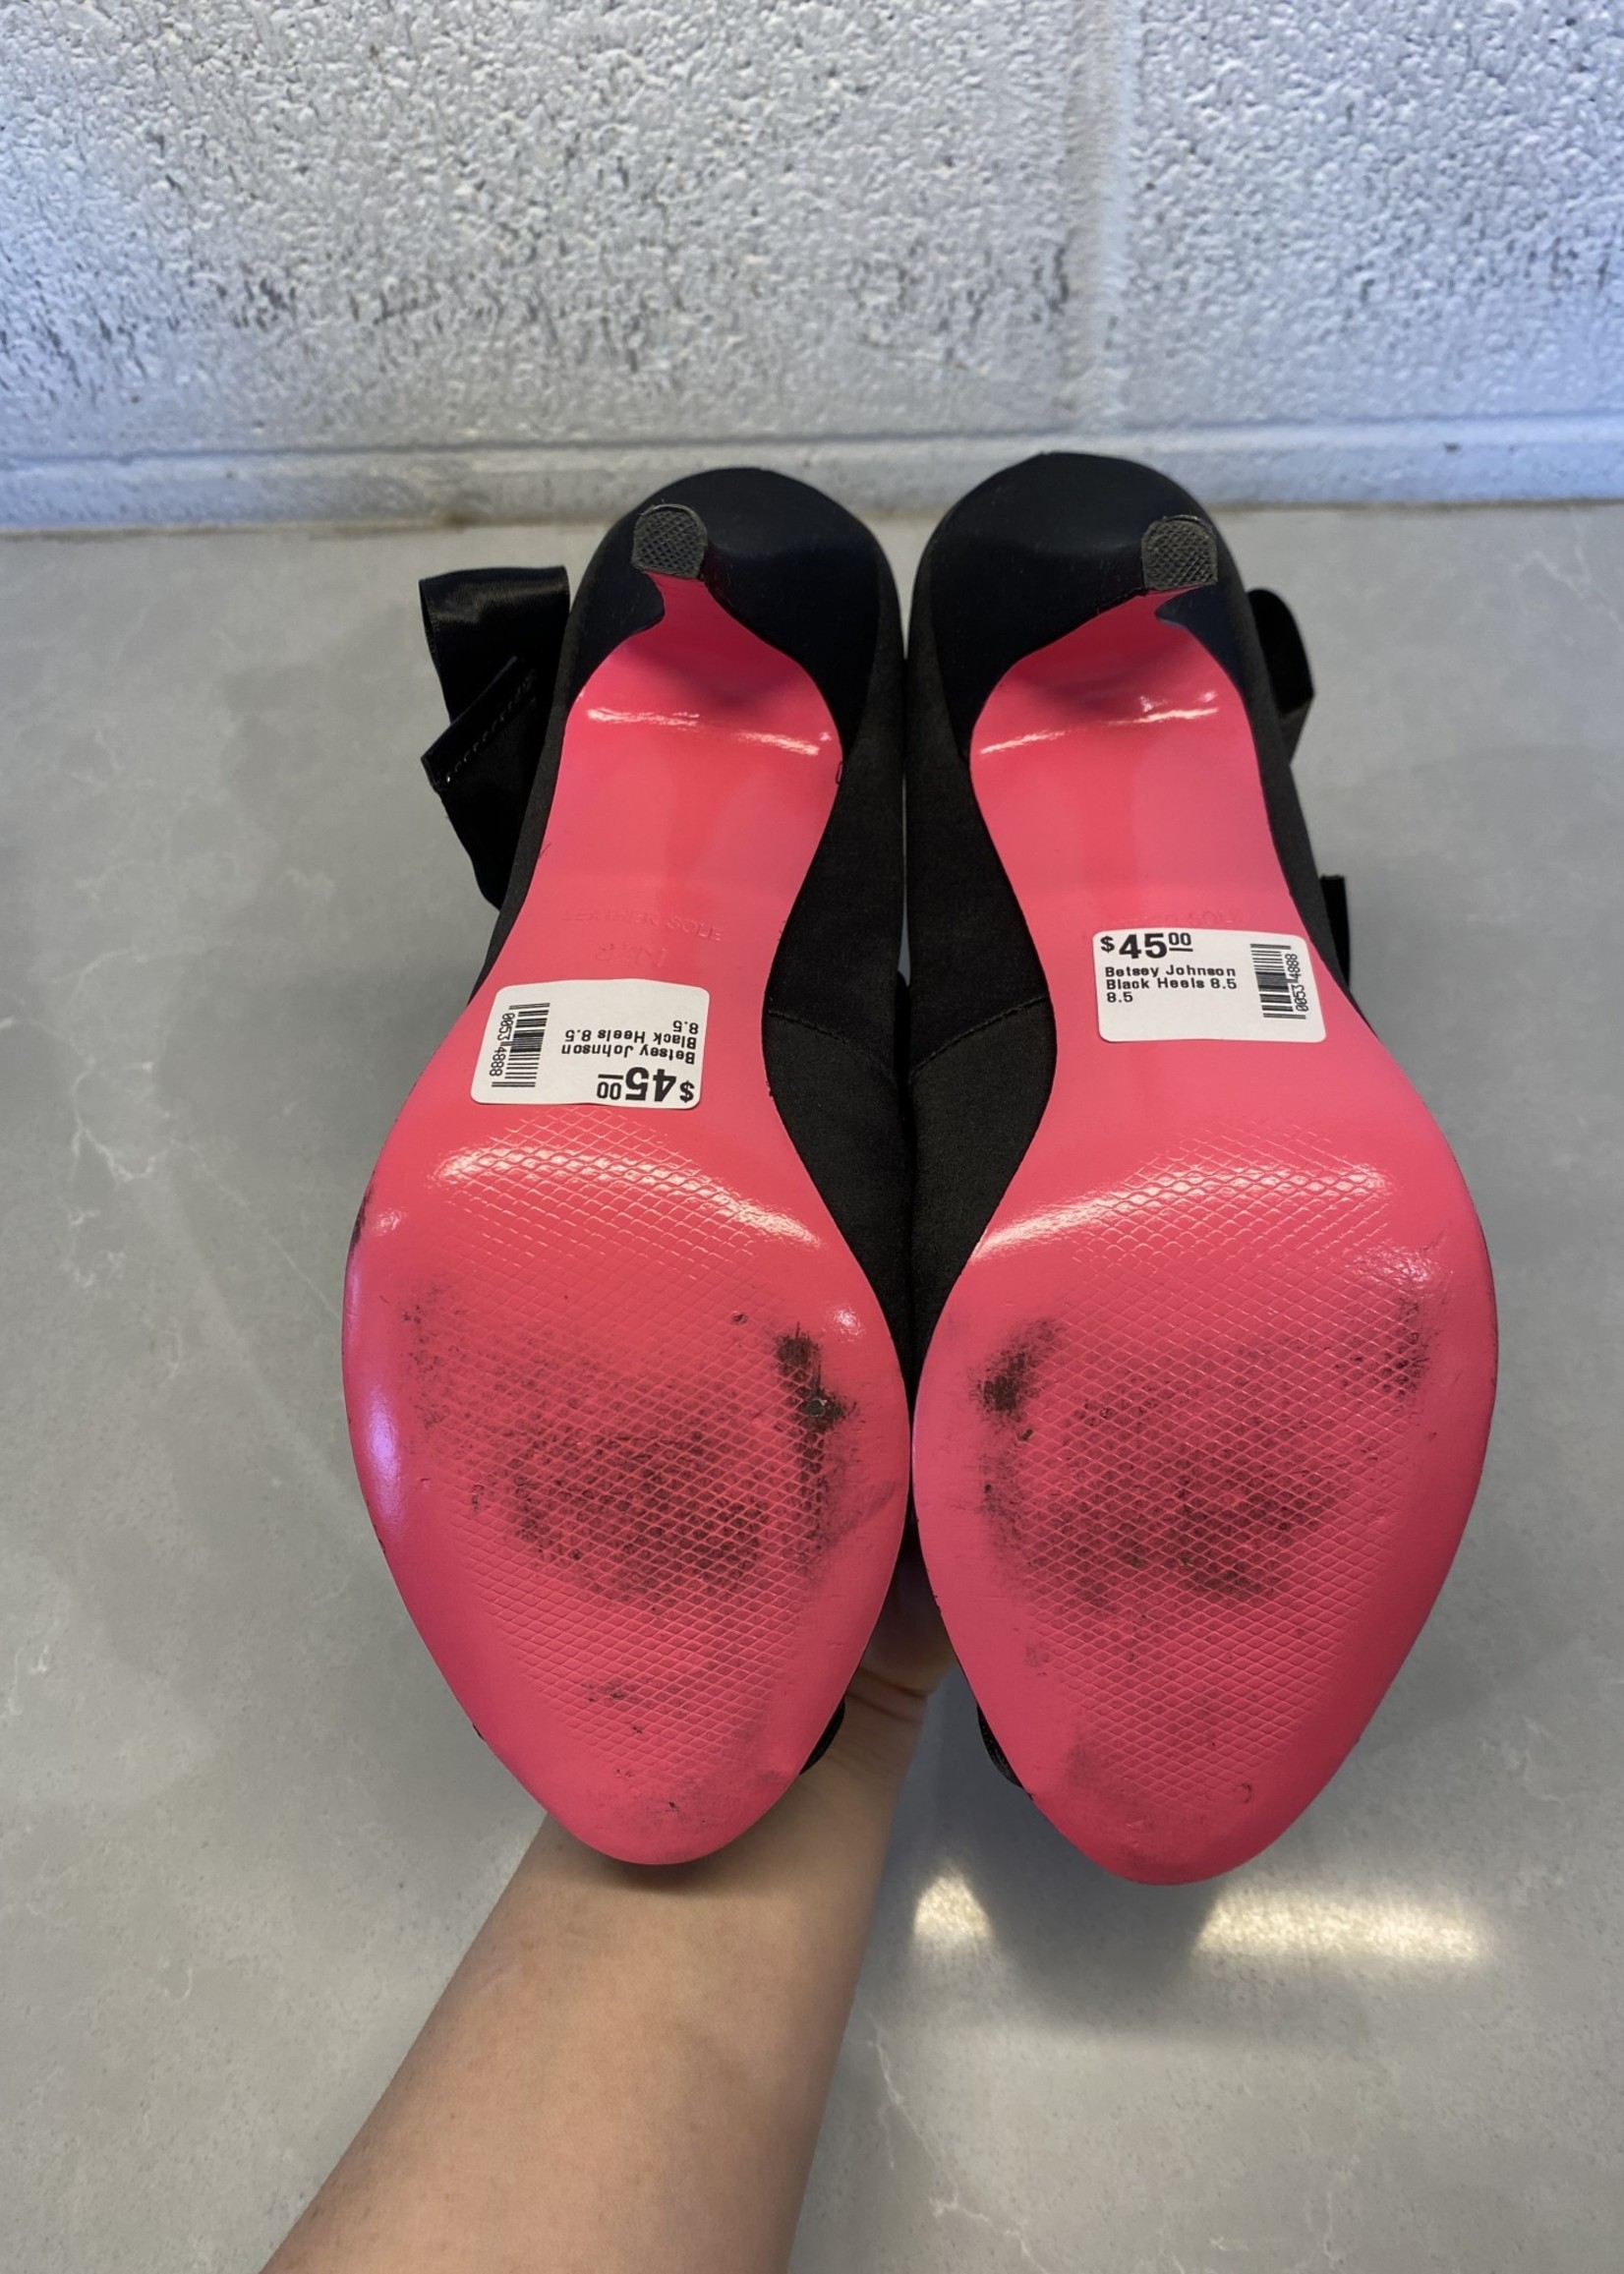 Betsey Johnson Black Heels 8.5